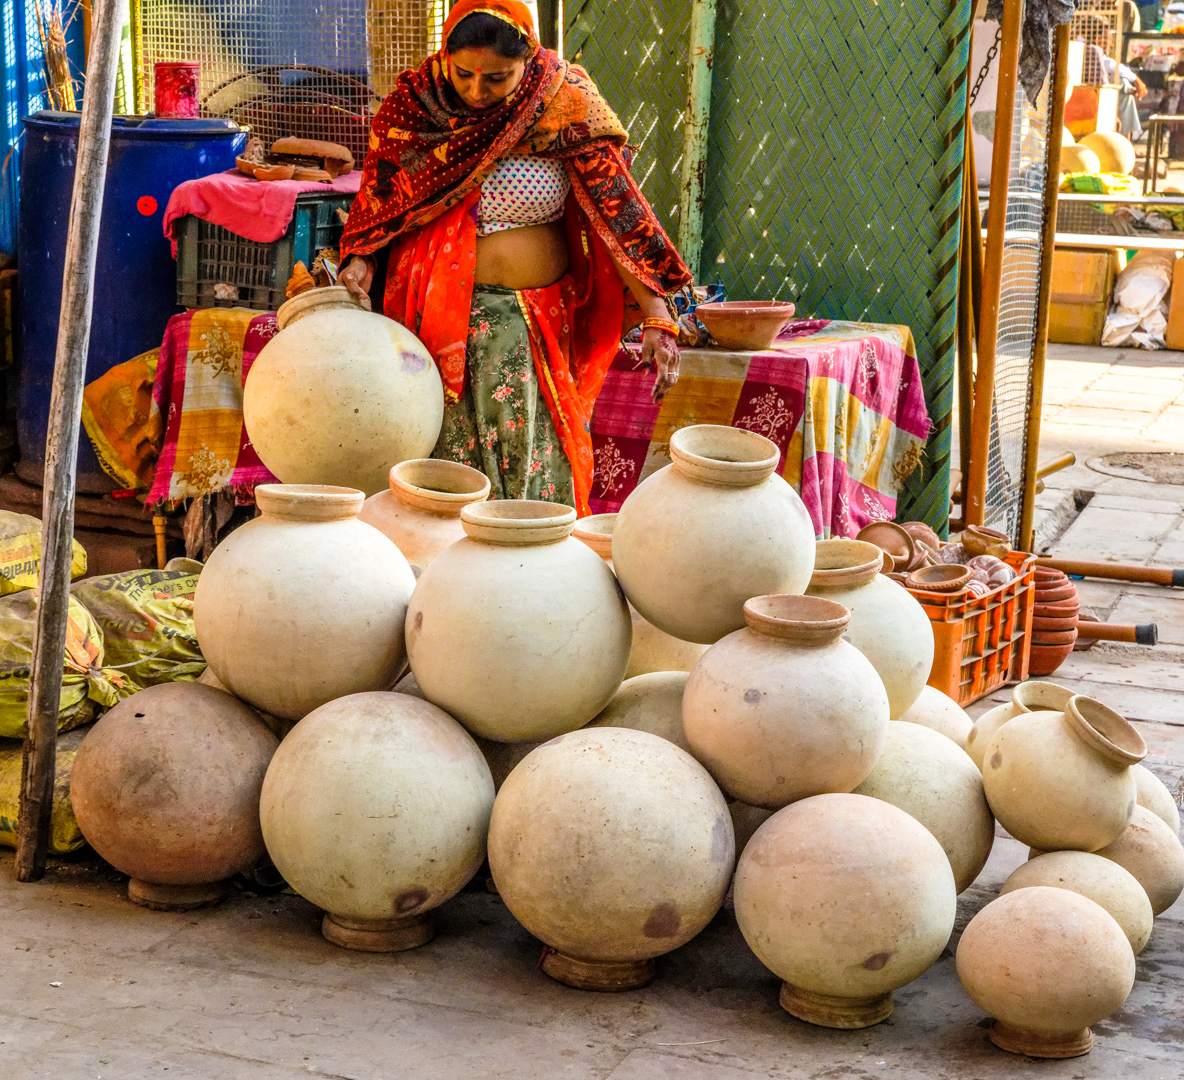 Morning Market at Jodhpur, India by Pinaki Sarkar